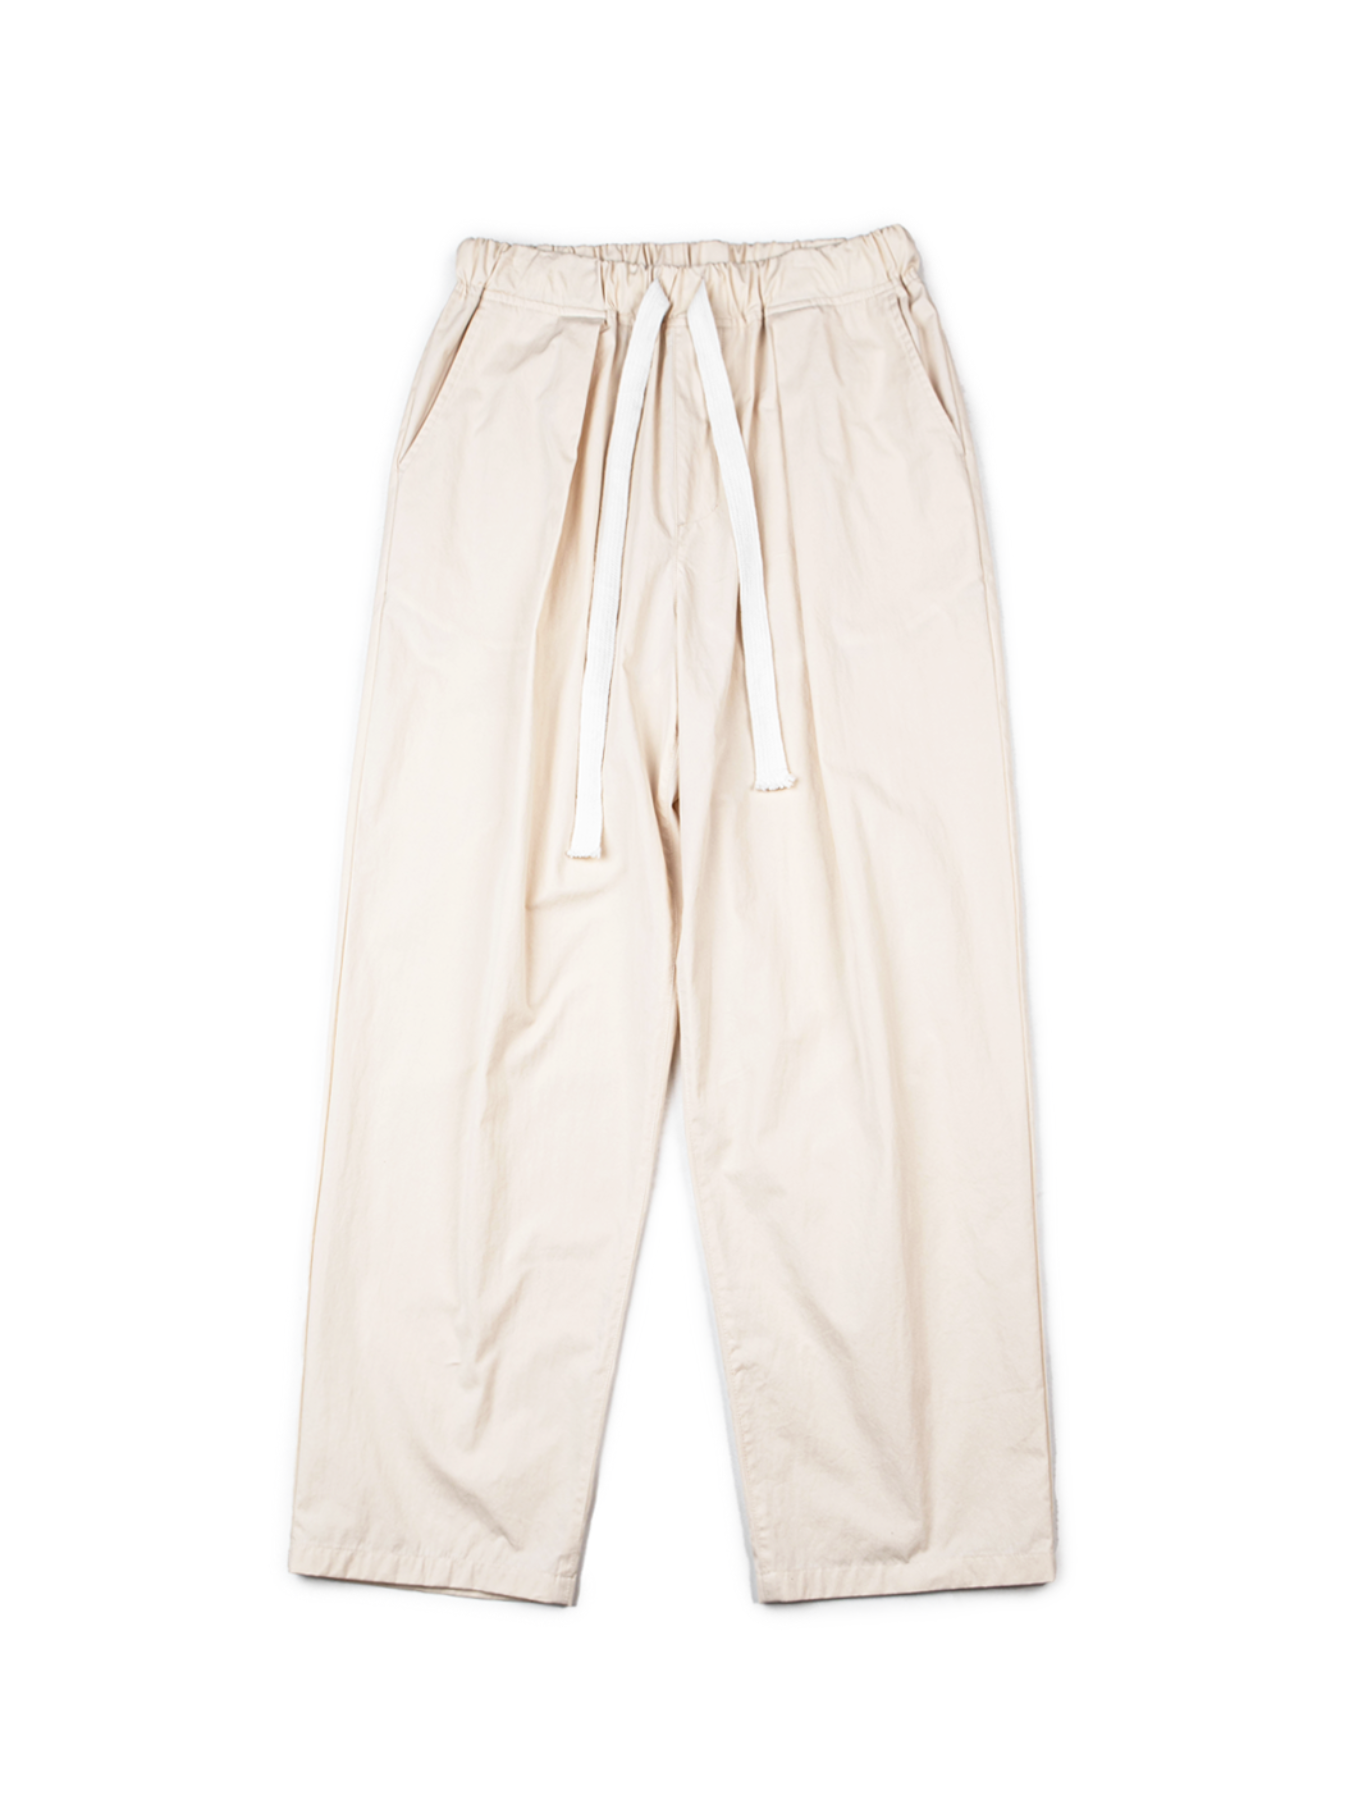 Symmetric relaxer pants #12 [cream]